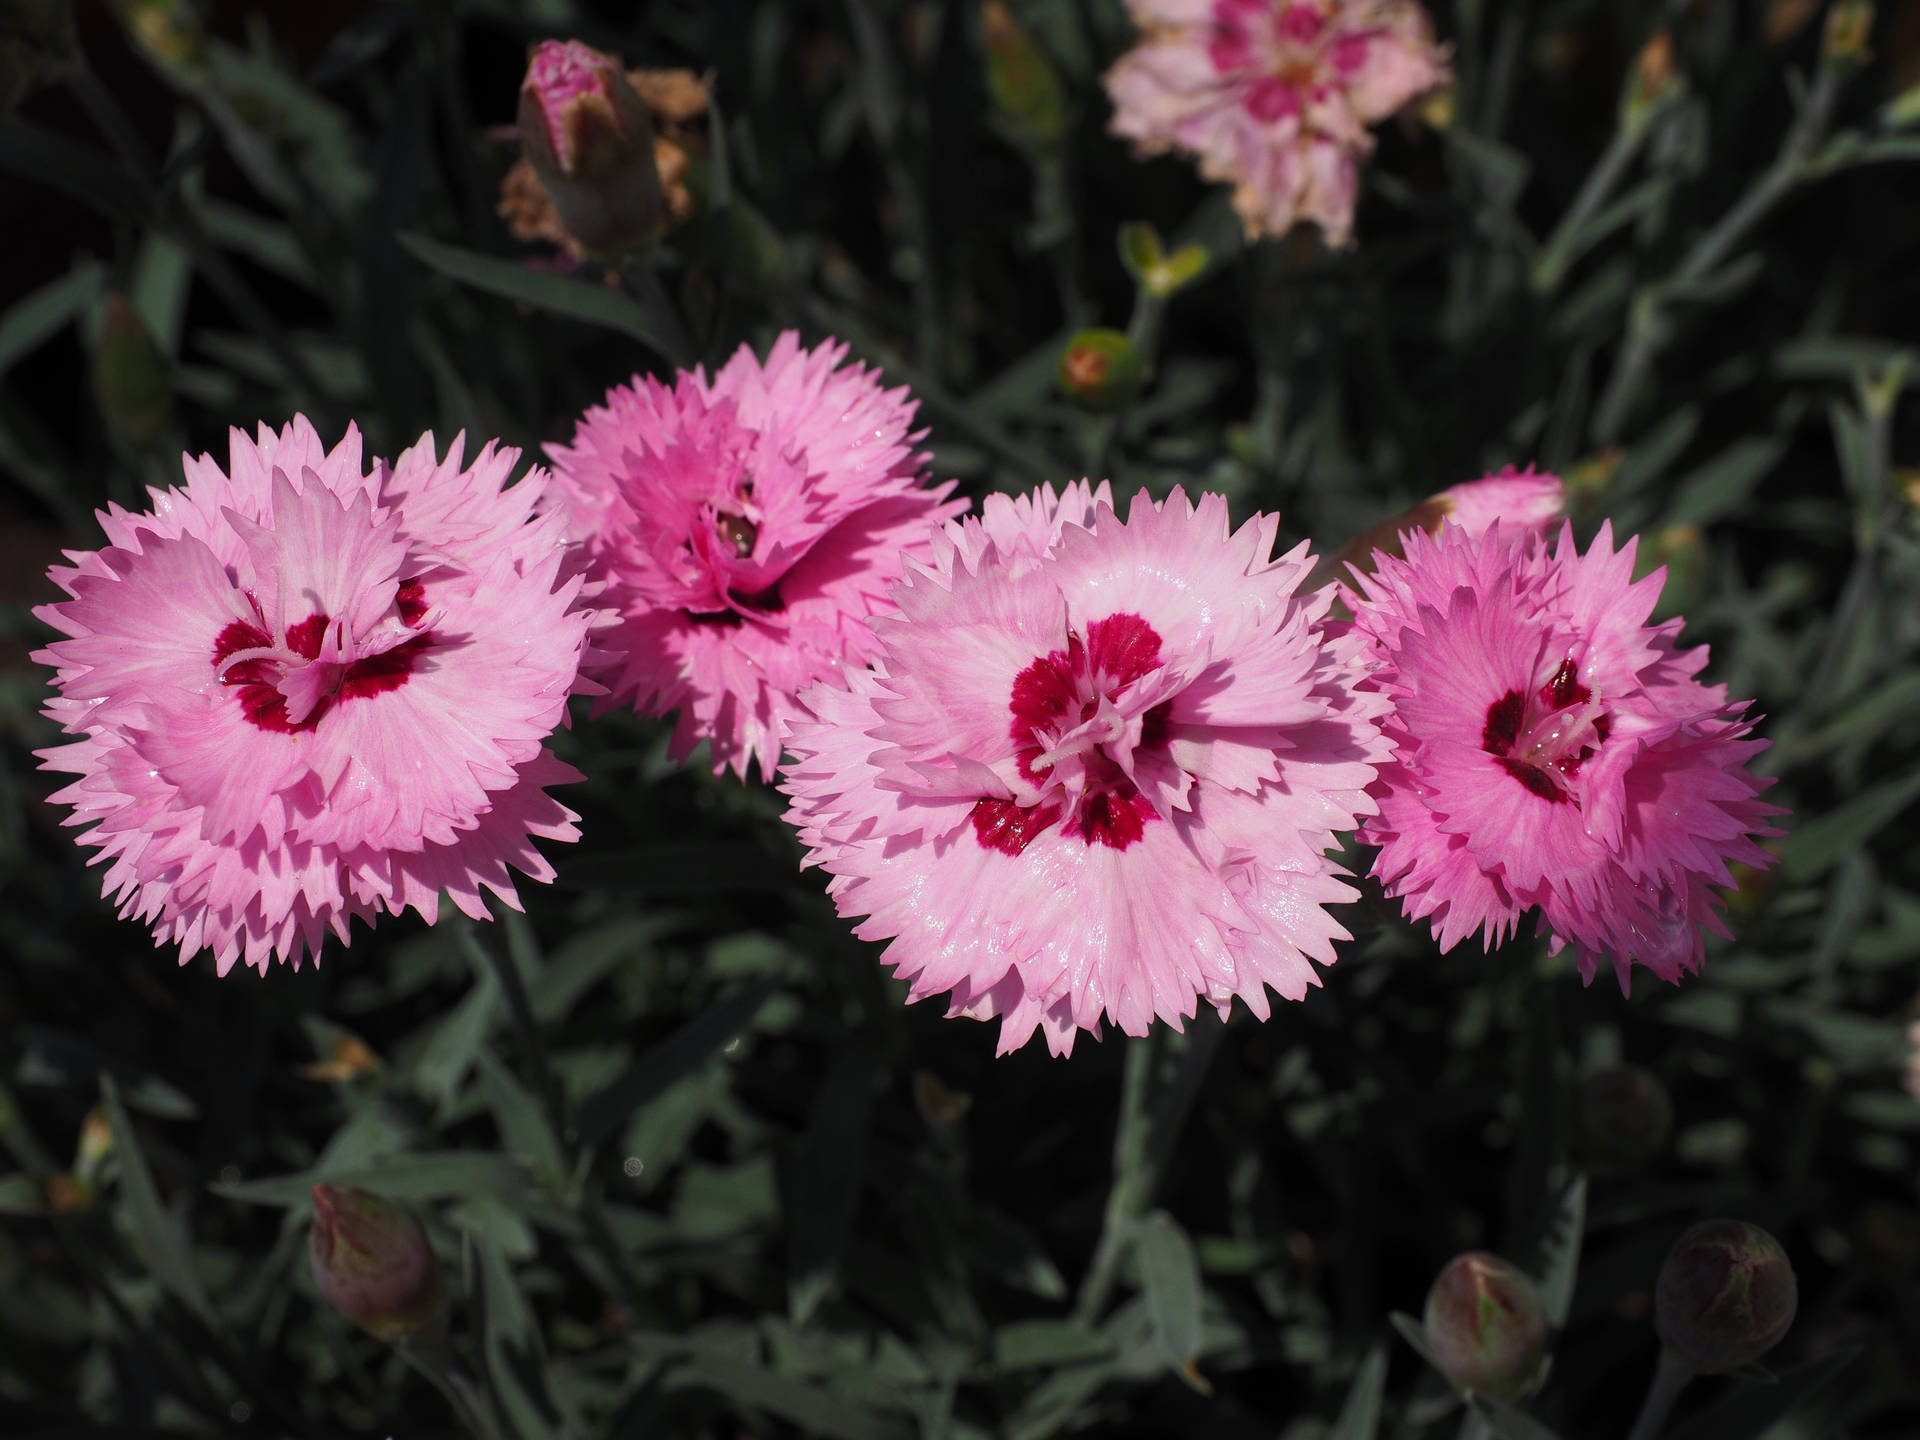 Mesmerizing Pink Carnation in Full Bloom Wallpaper